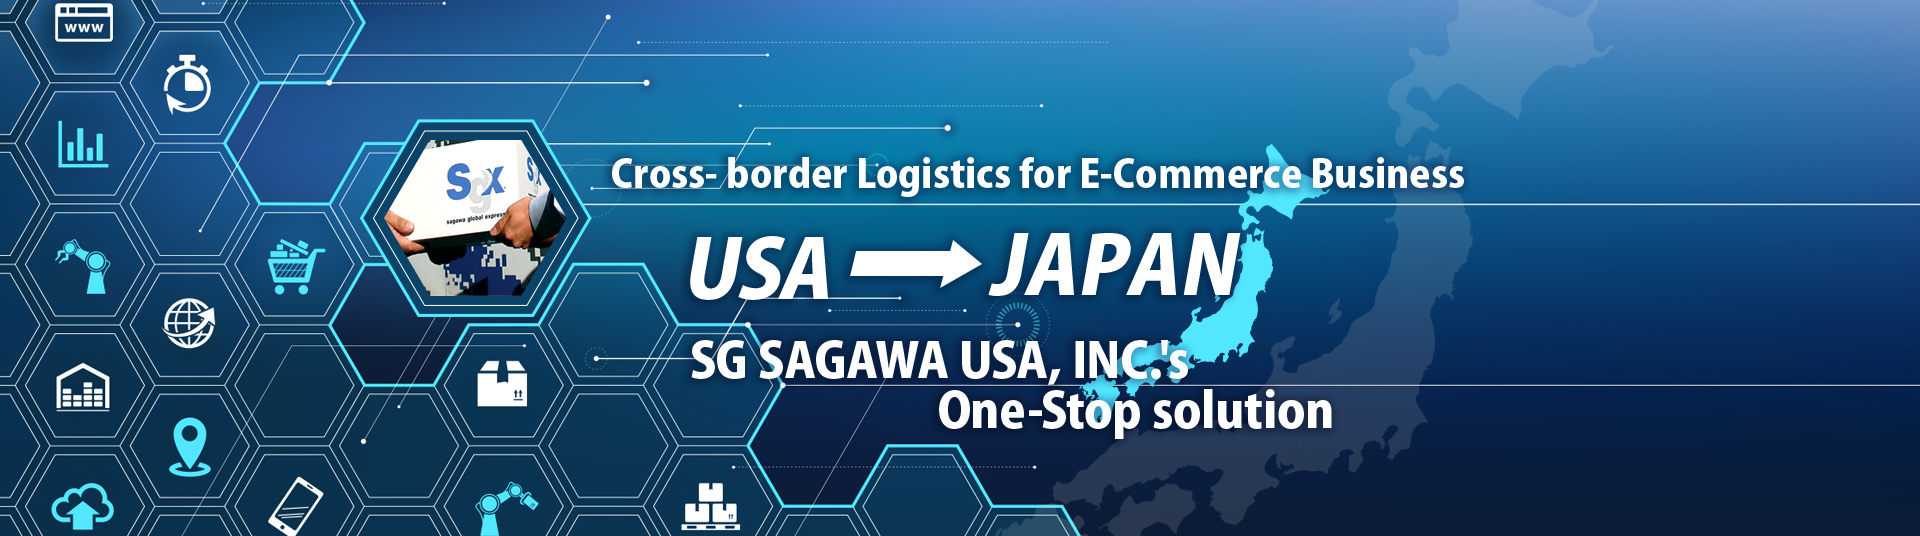 Cross-border Logistics for E-Commerce Business: USA to Japan SG SAGAWA's One-Stop solution